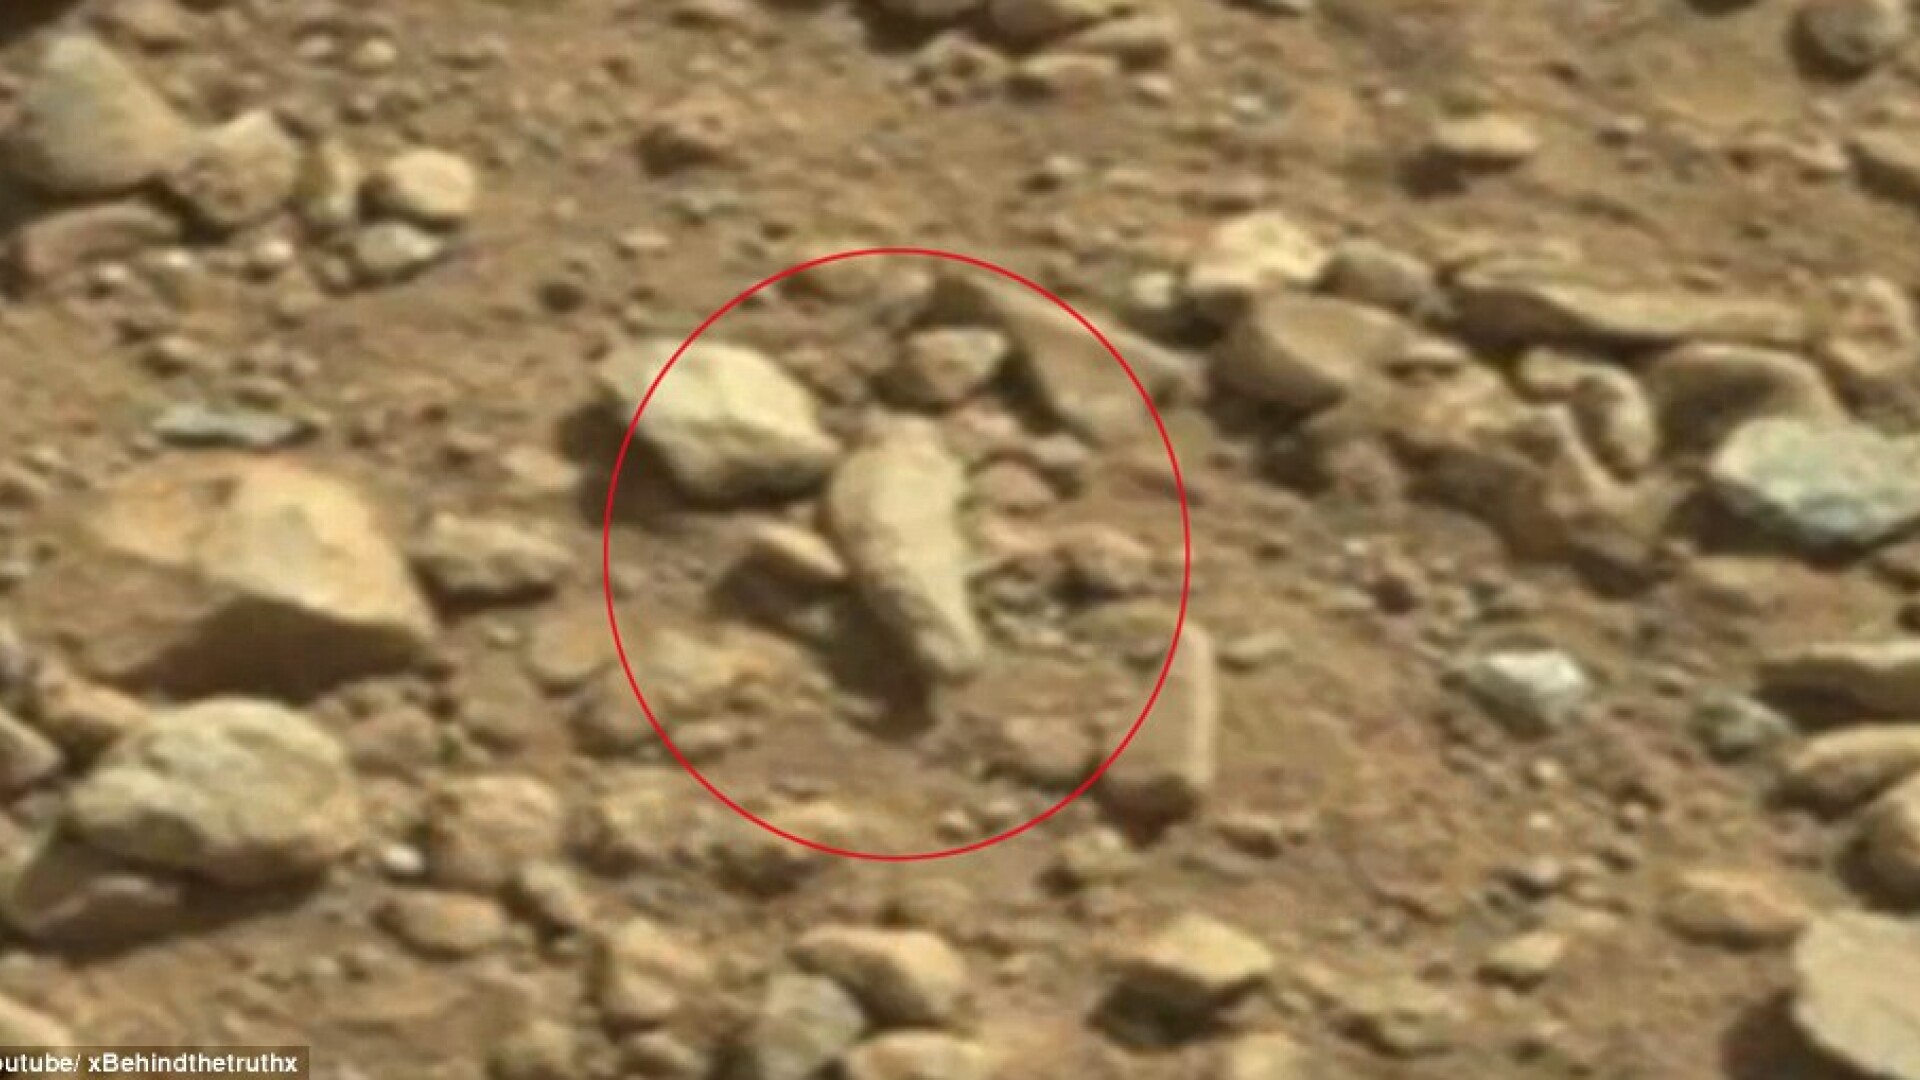 obiect ciudat pe Marte